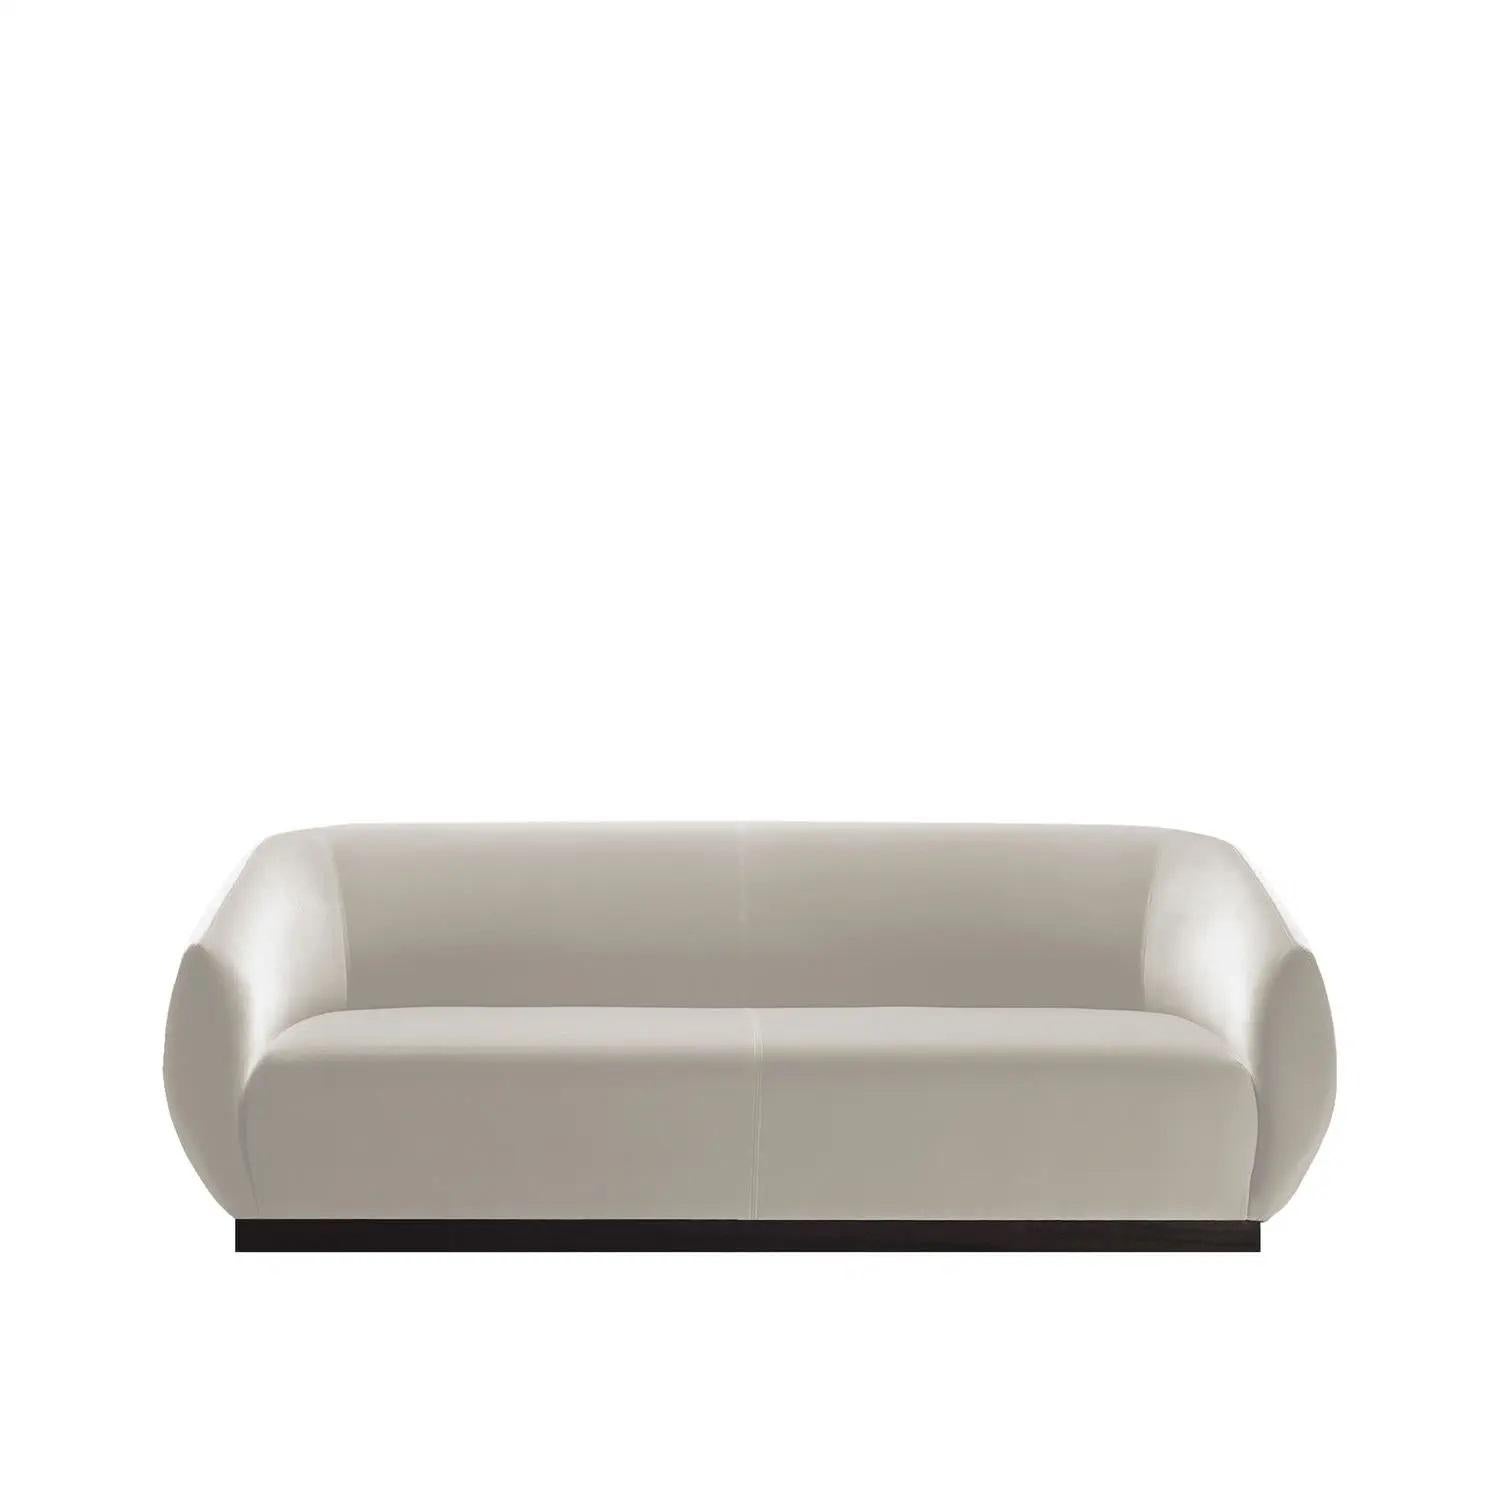 Mid-Century Modern Contemporary Sofa Offered in Light Teal Velvet For Sale